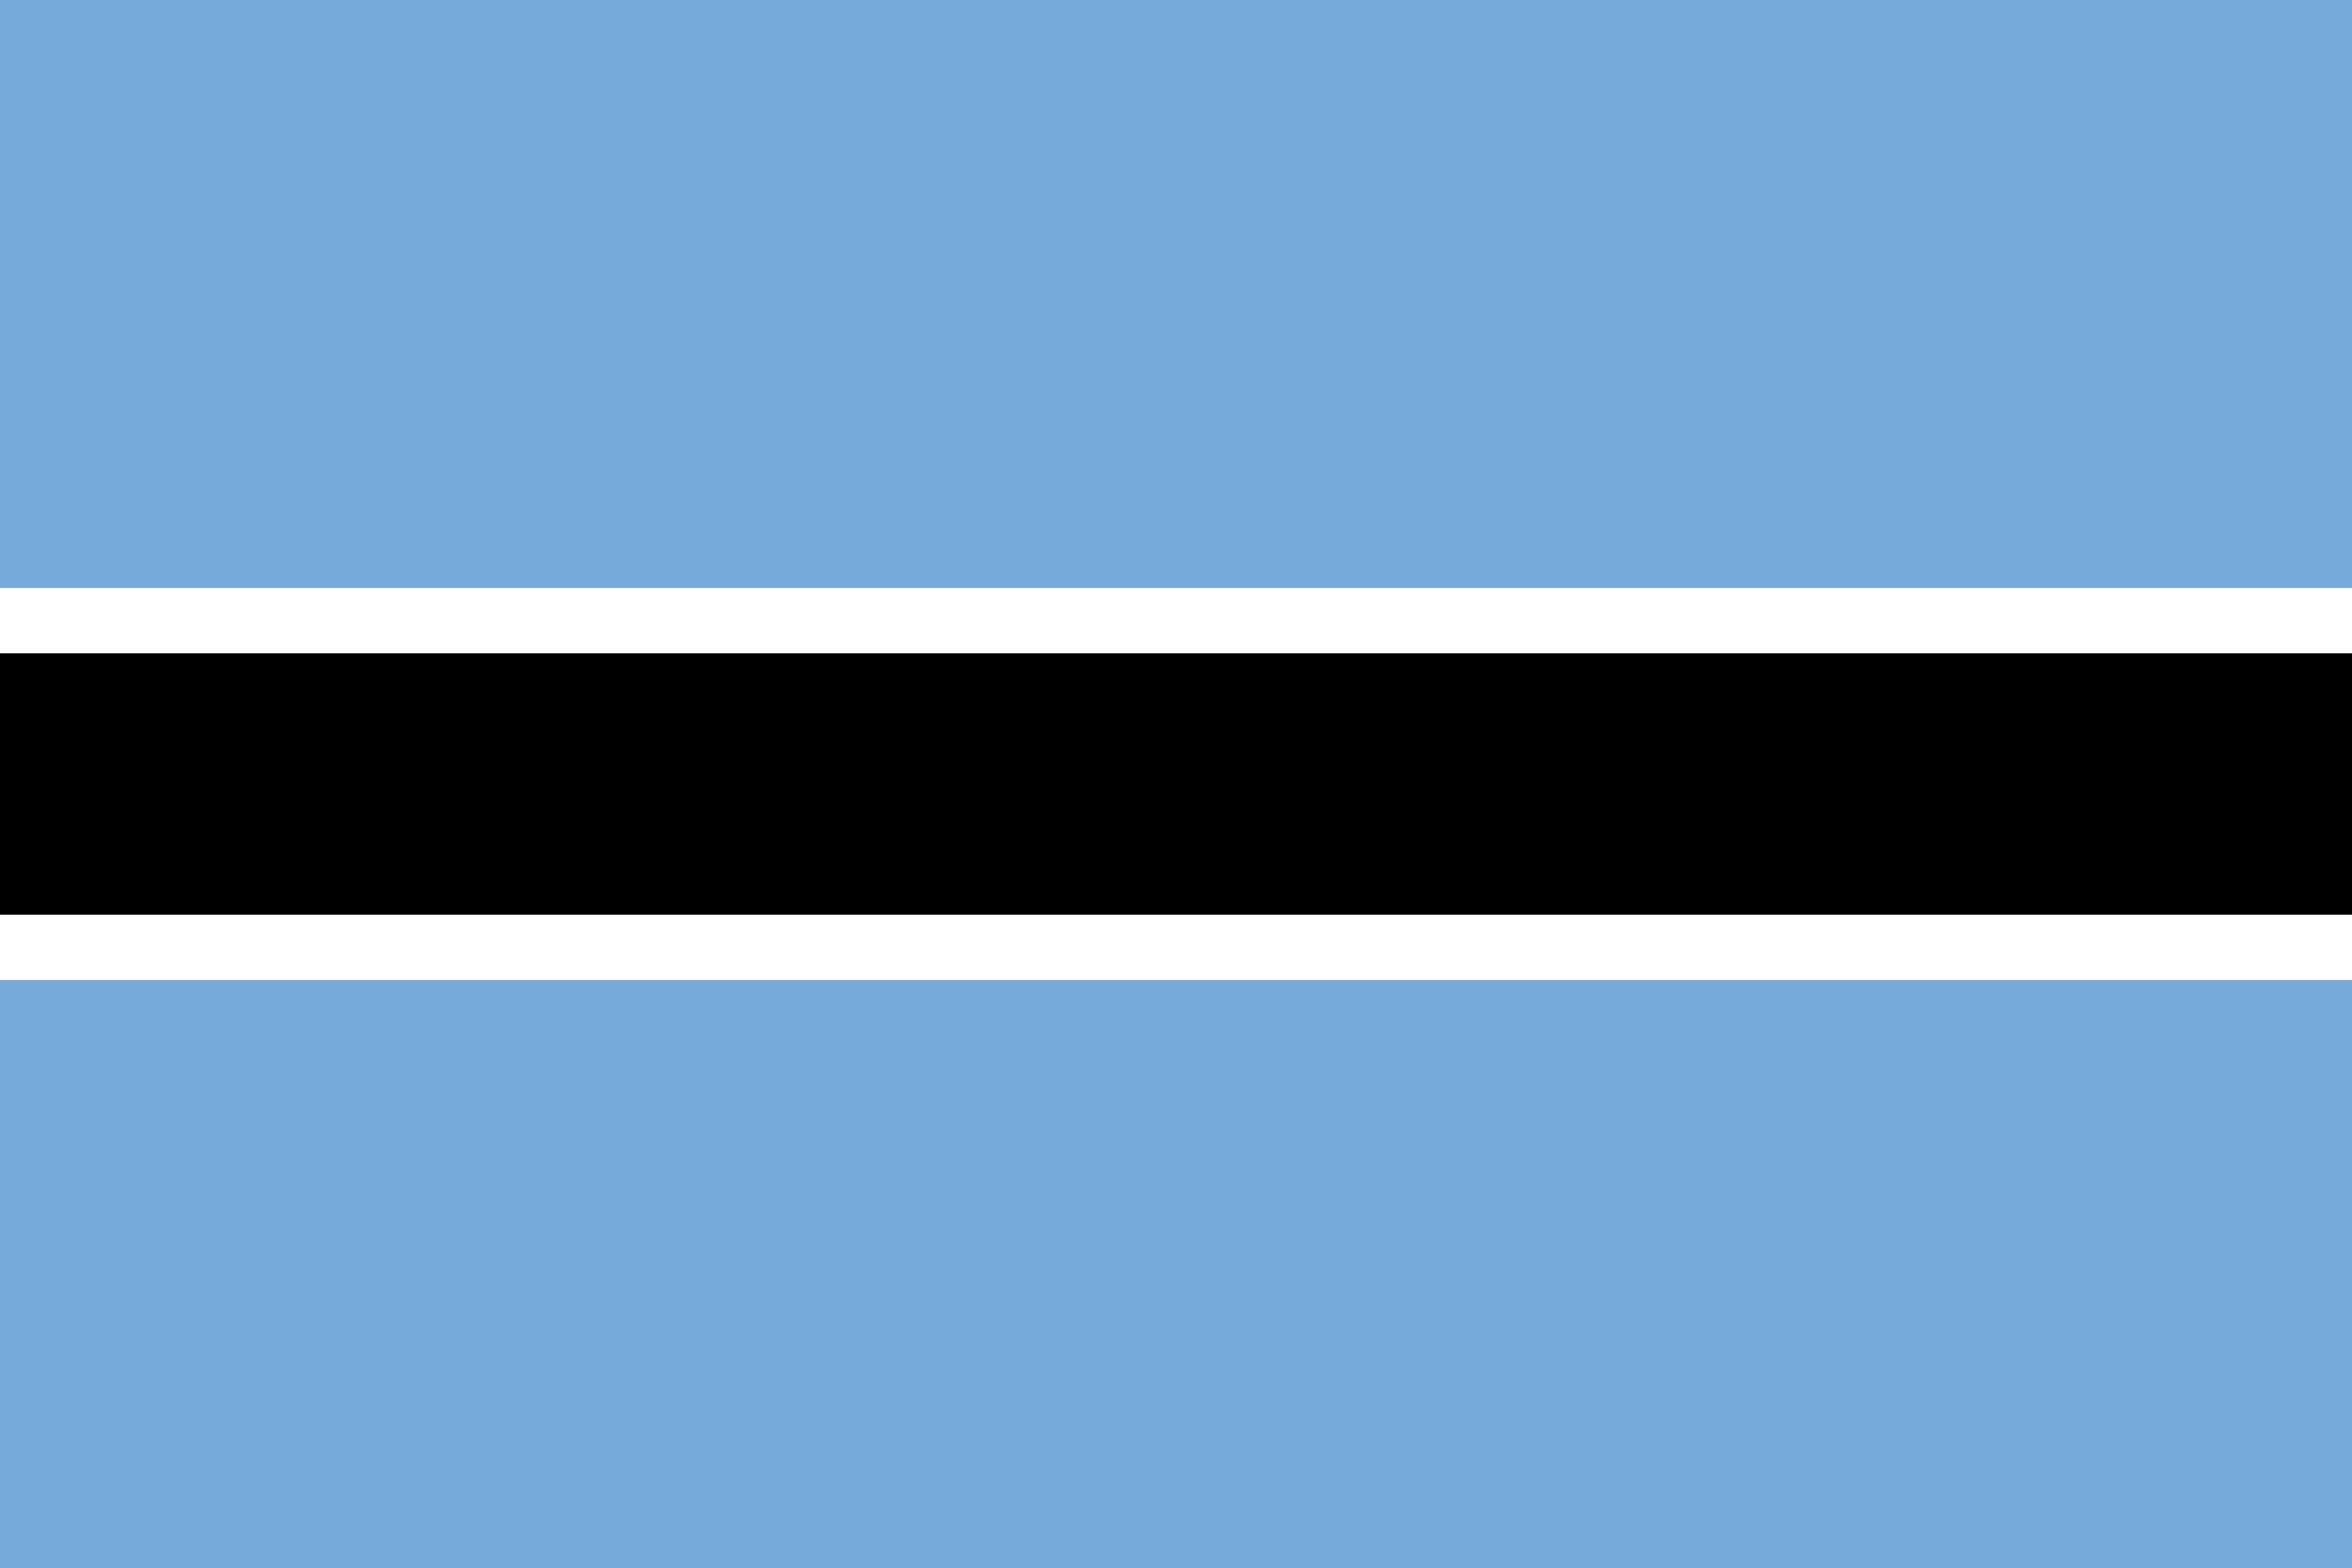 Botswana's flag